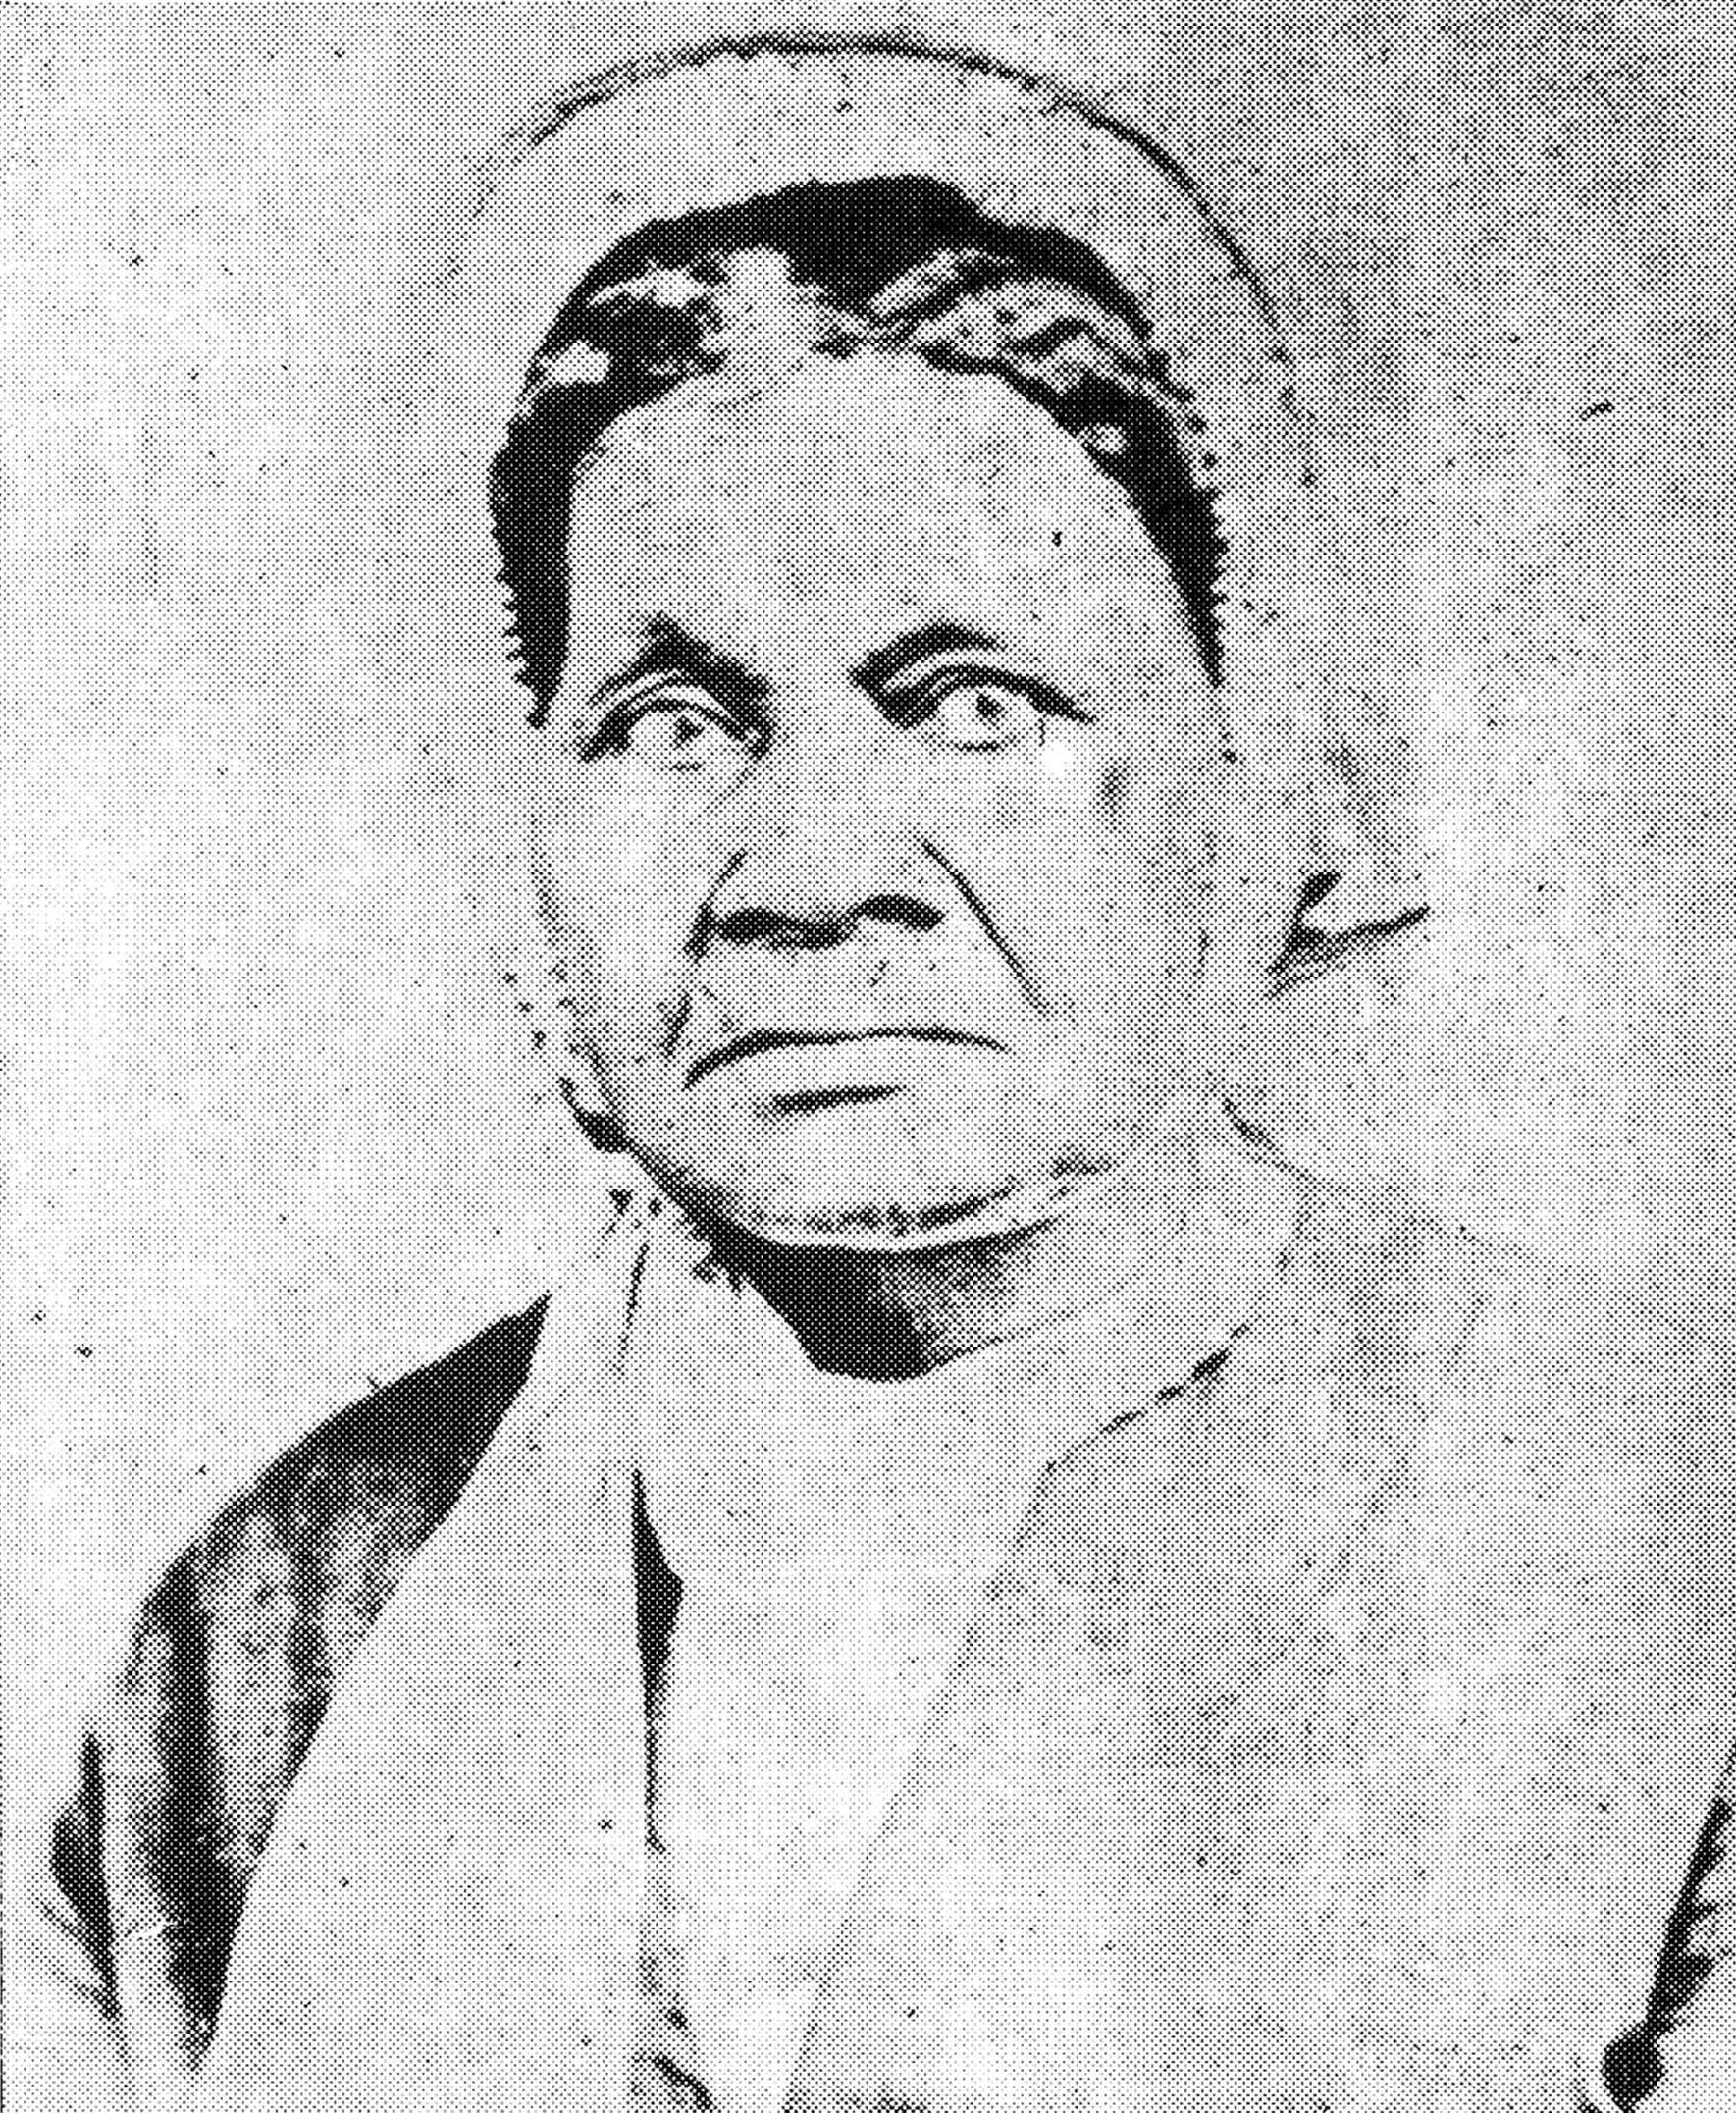 Mother Priscilla Baltimore